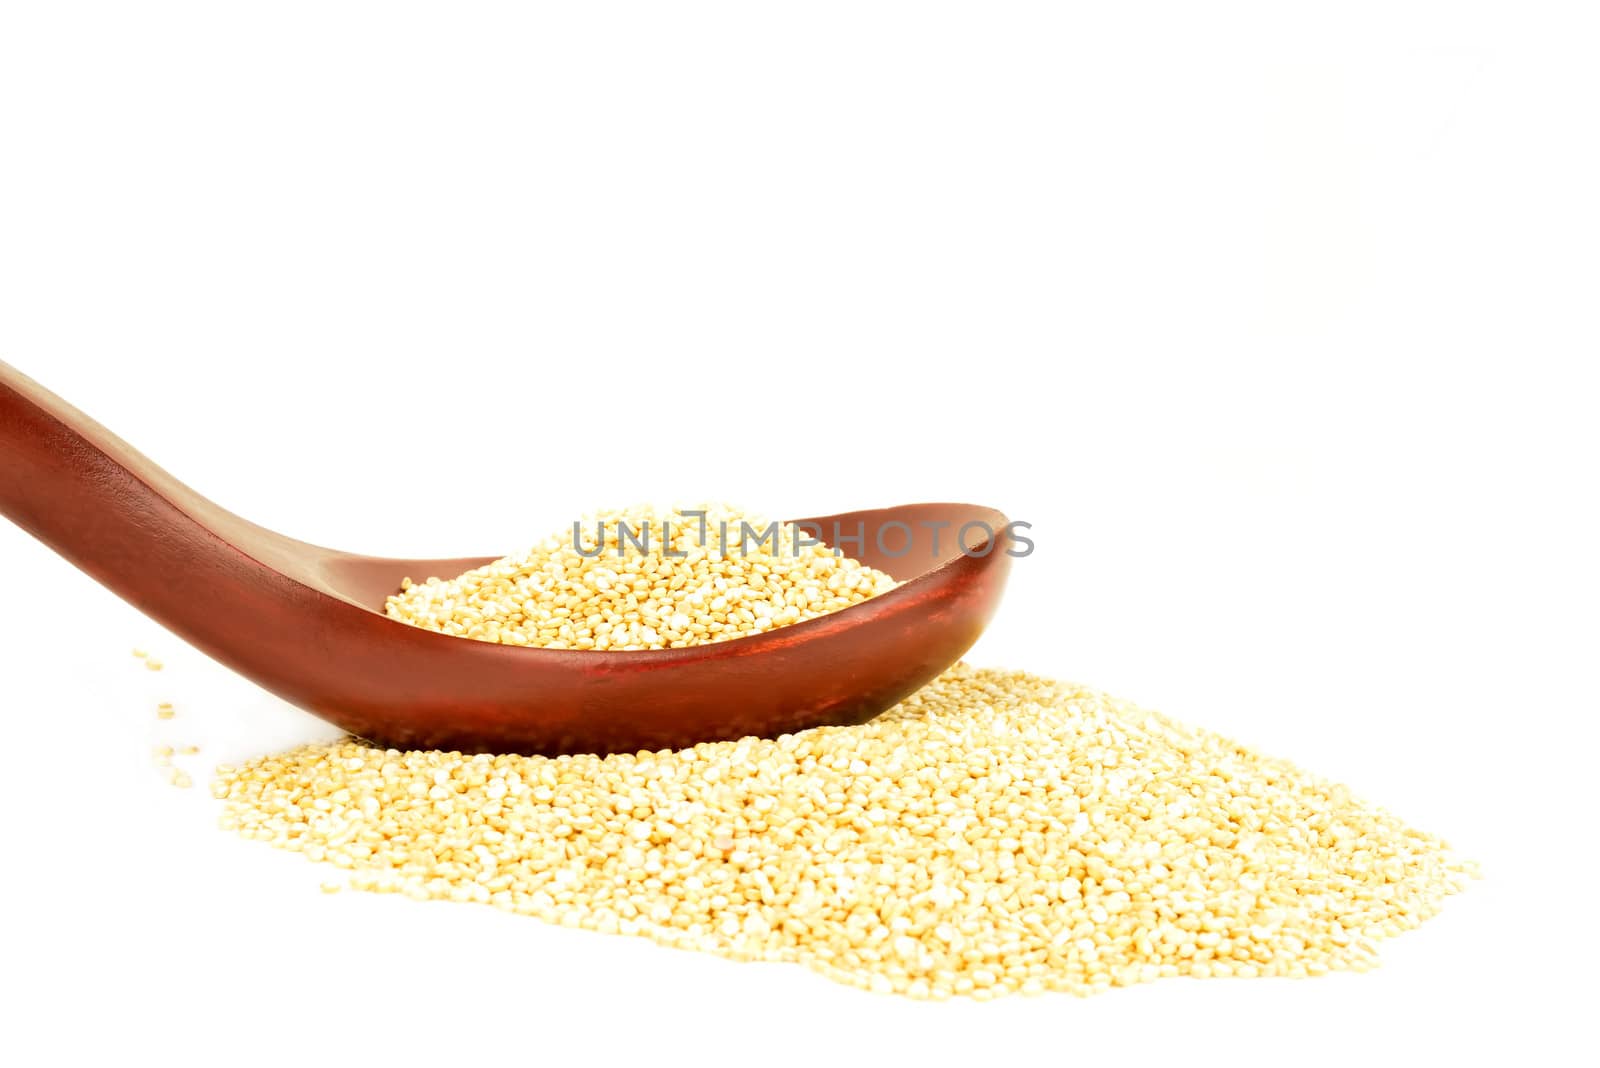 uncooked quinoa white background by Carche